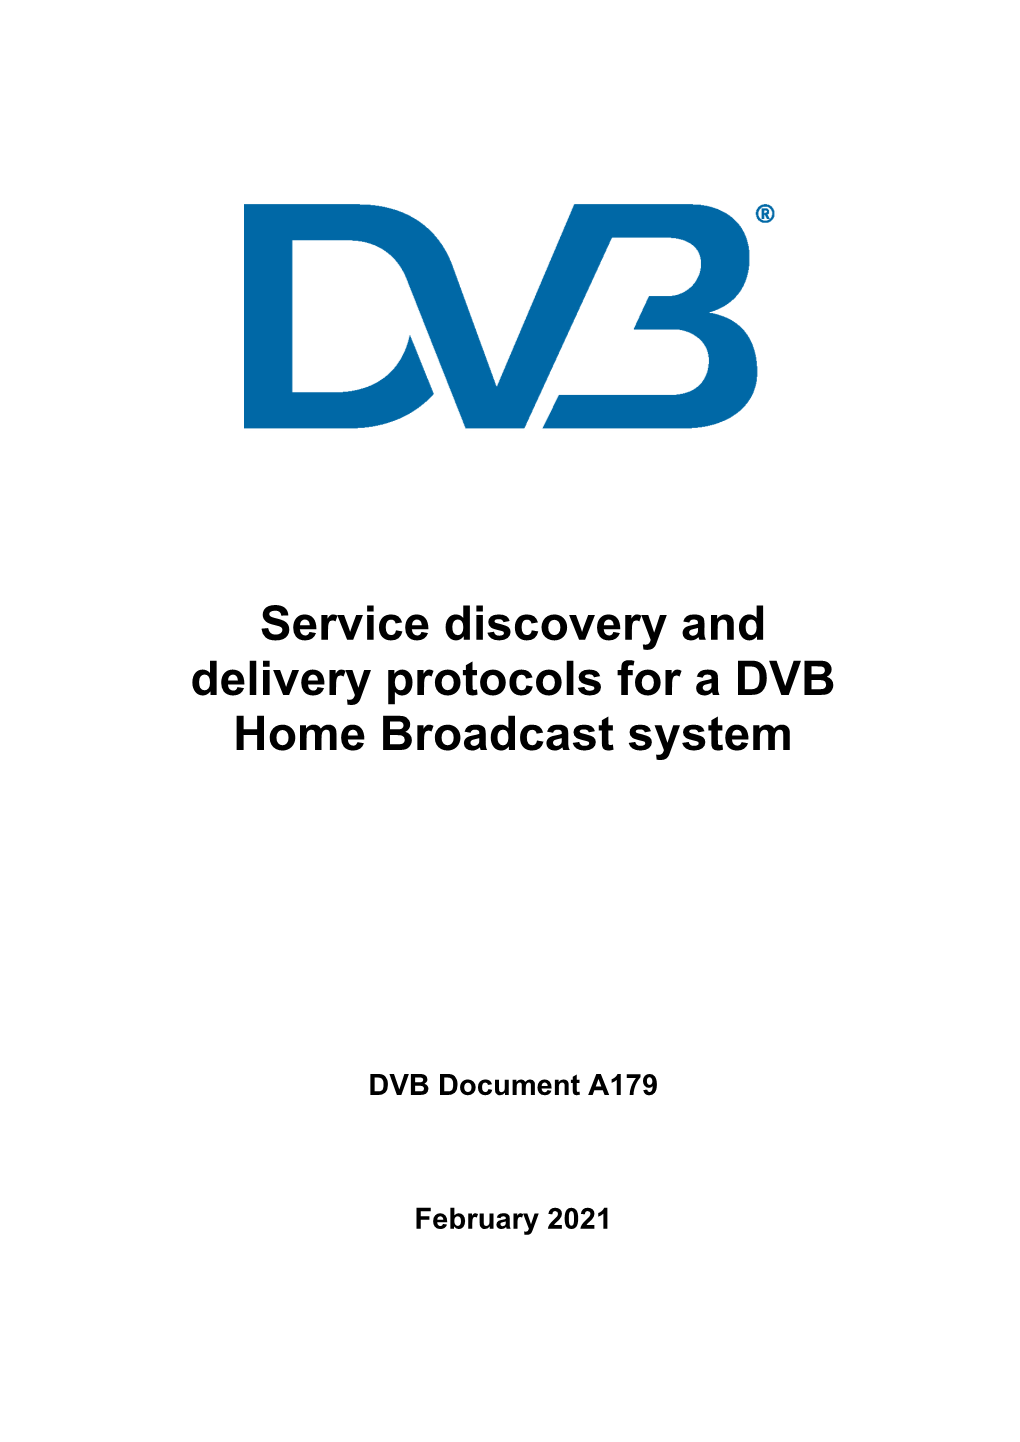 DVB Bluebook A179 (February 2021) 4